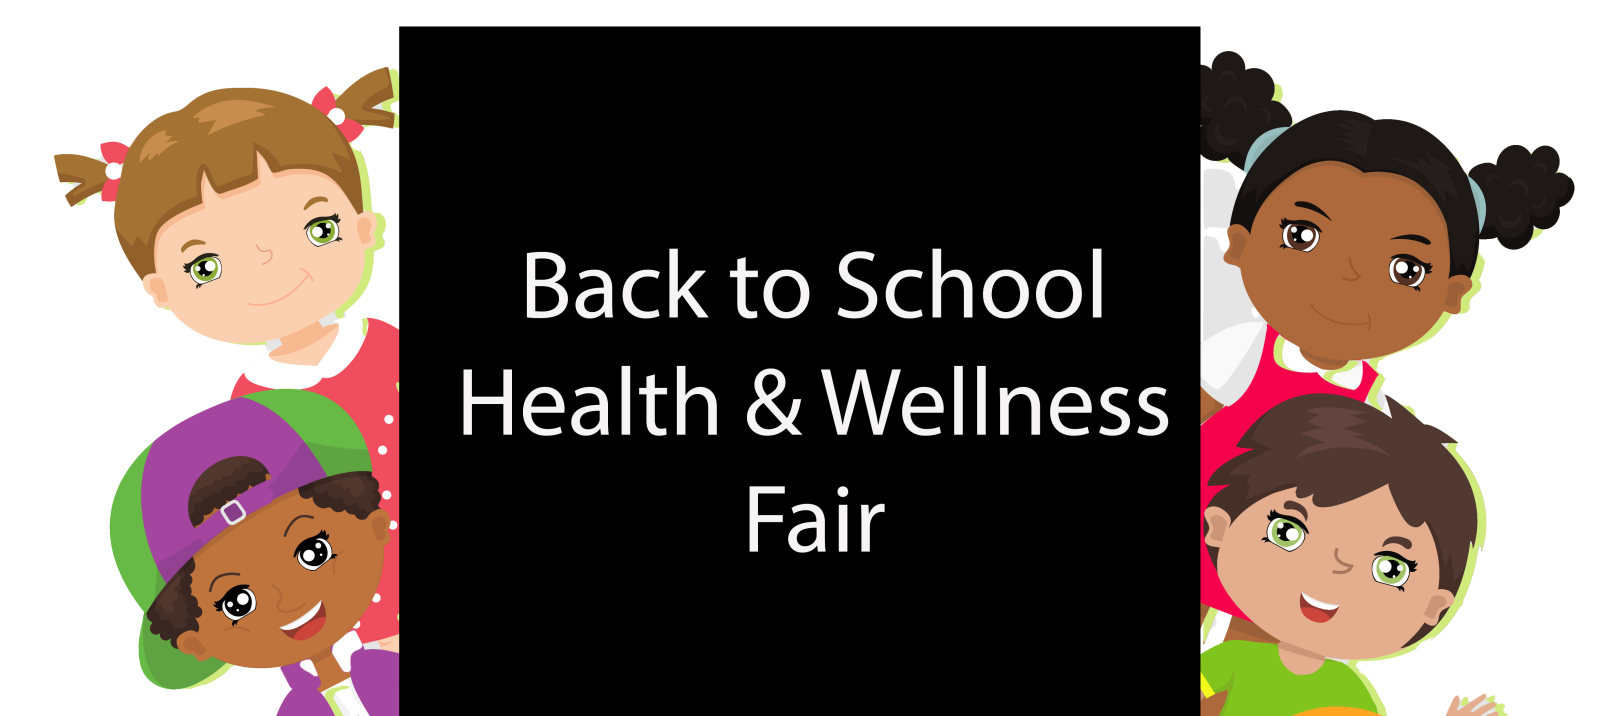 Pediatrics Back to School Health & Wellness Fair - Priority Health Care | For All Your Health Care Needs